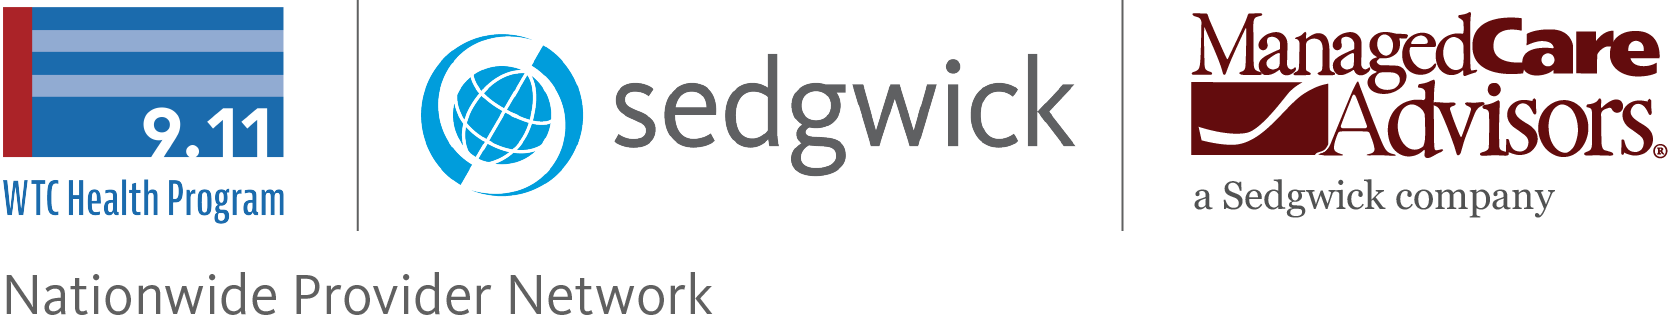 Nationwide Provider Network logos including WTC Health Program, Sedgwick, and Managed Care Advisors, a Sedgwick company.